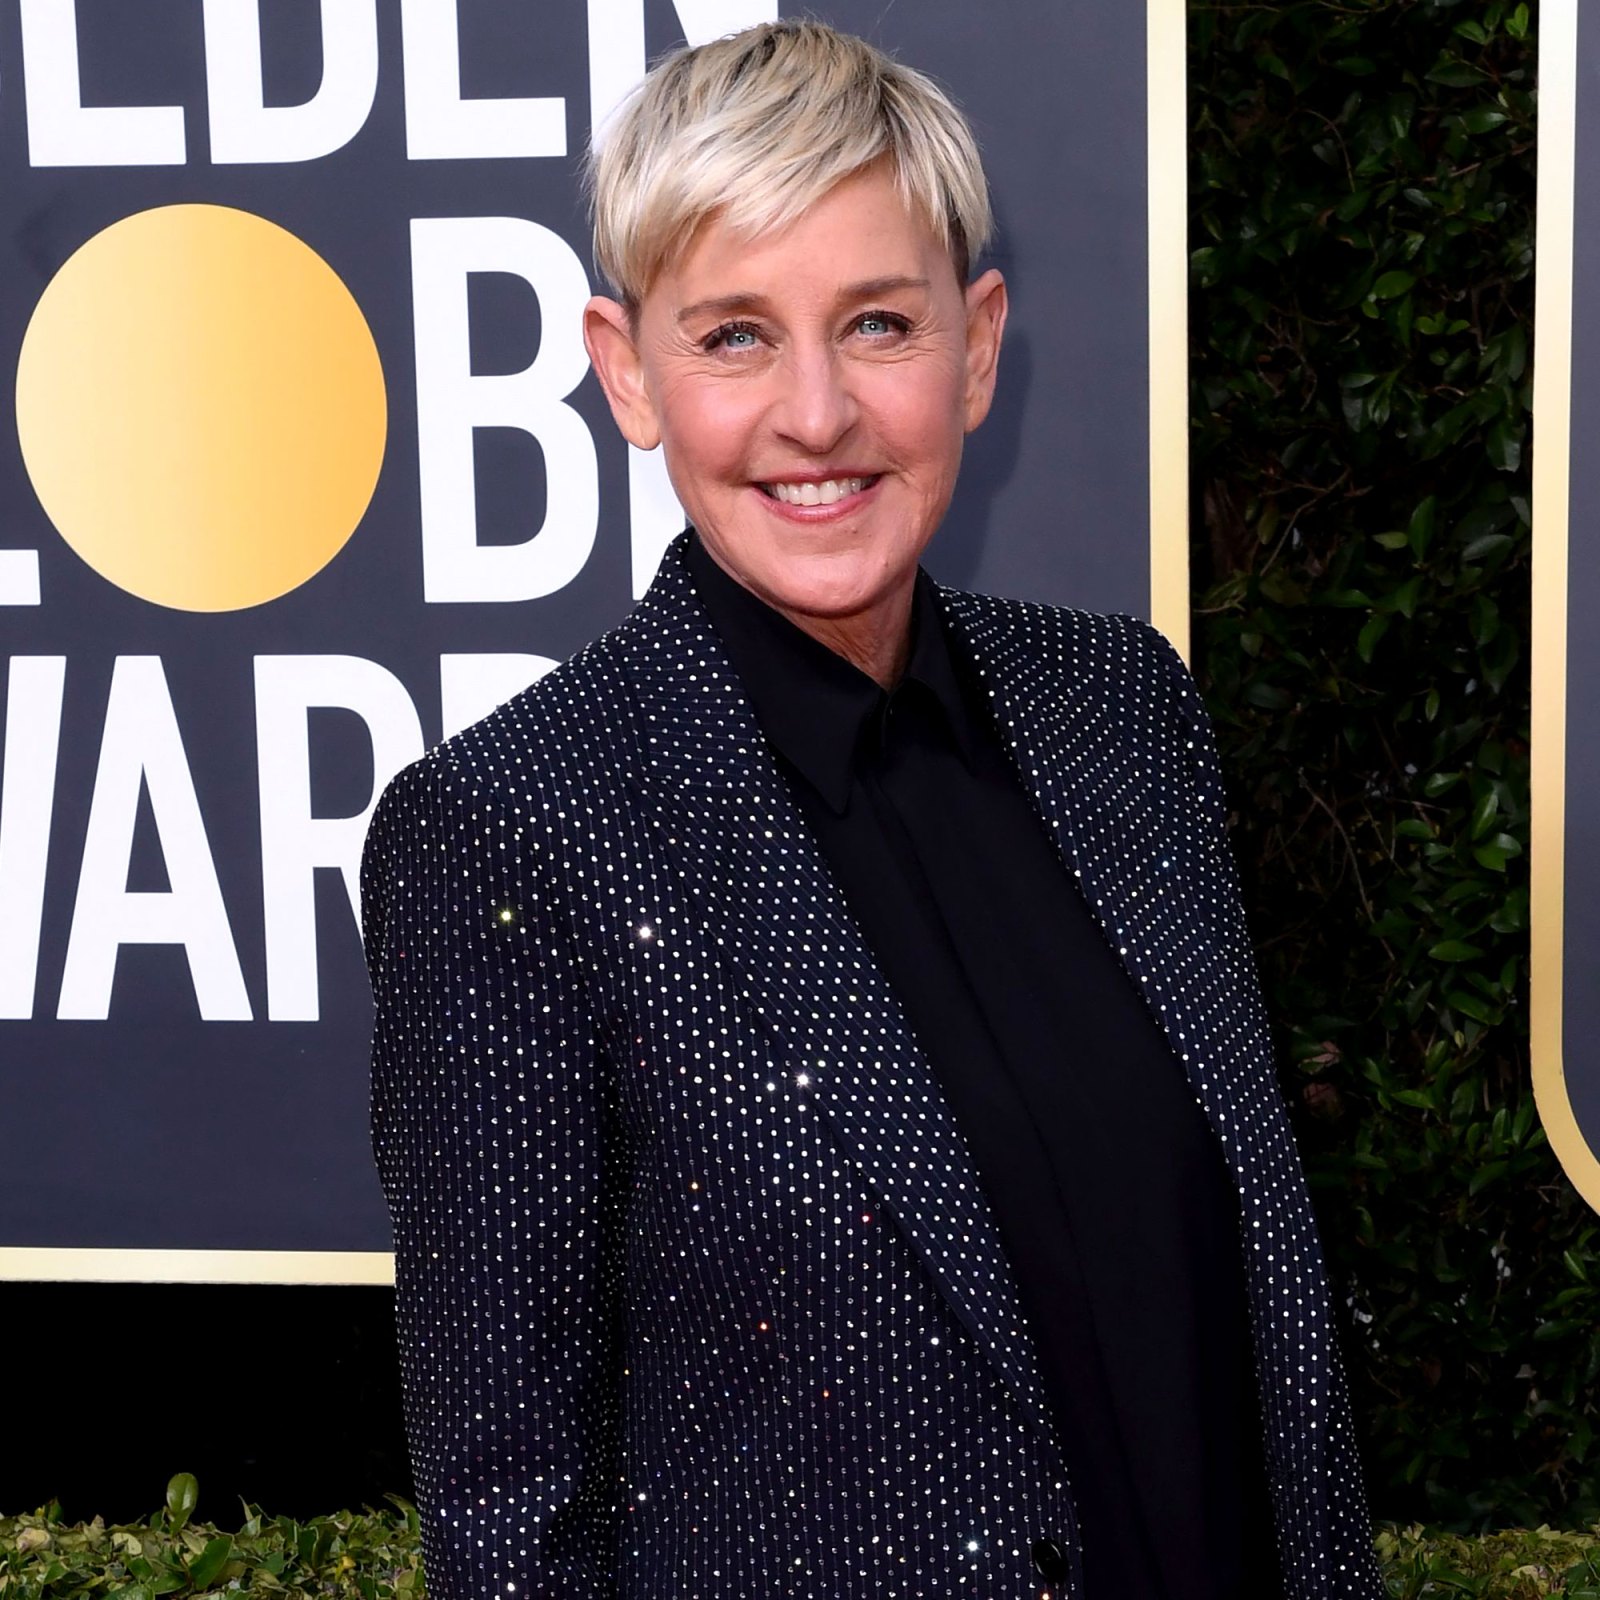 Ellen DeGeneres Tapes Final Episode of Talk Show: ‘Greatest Privilege’